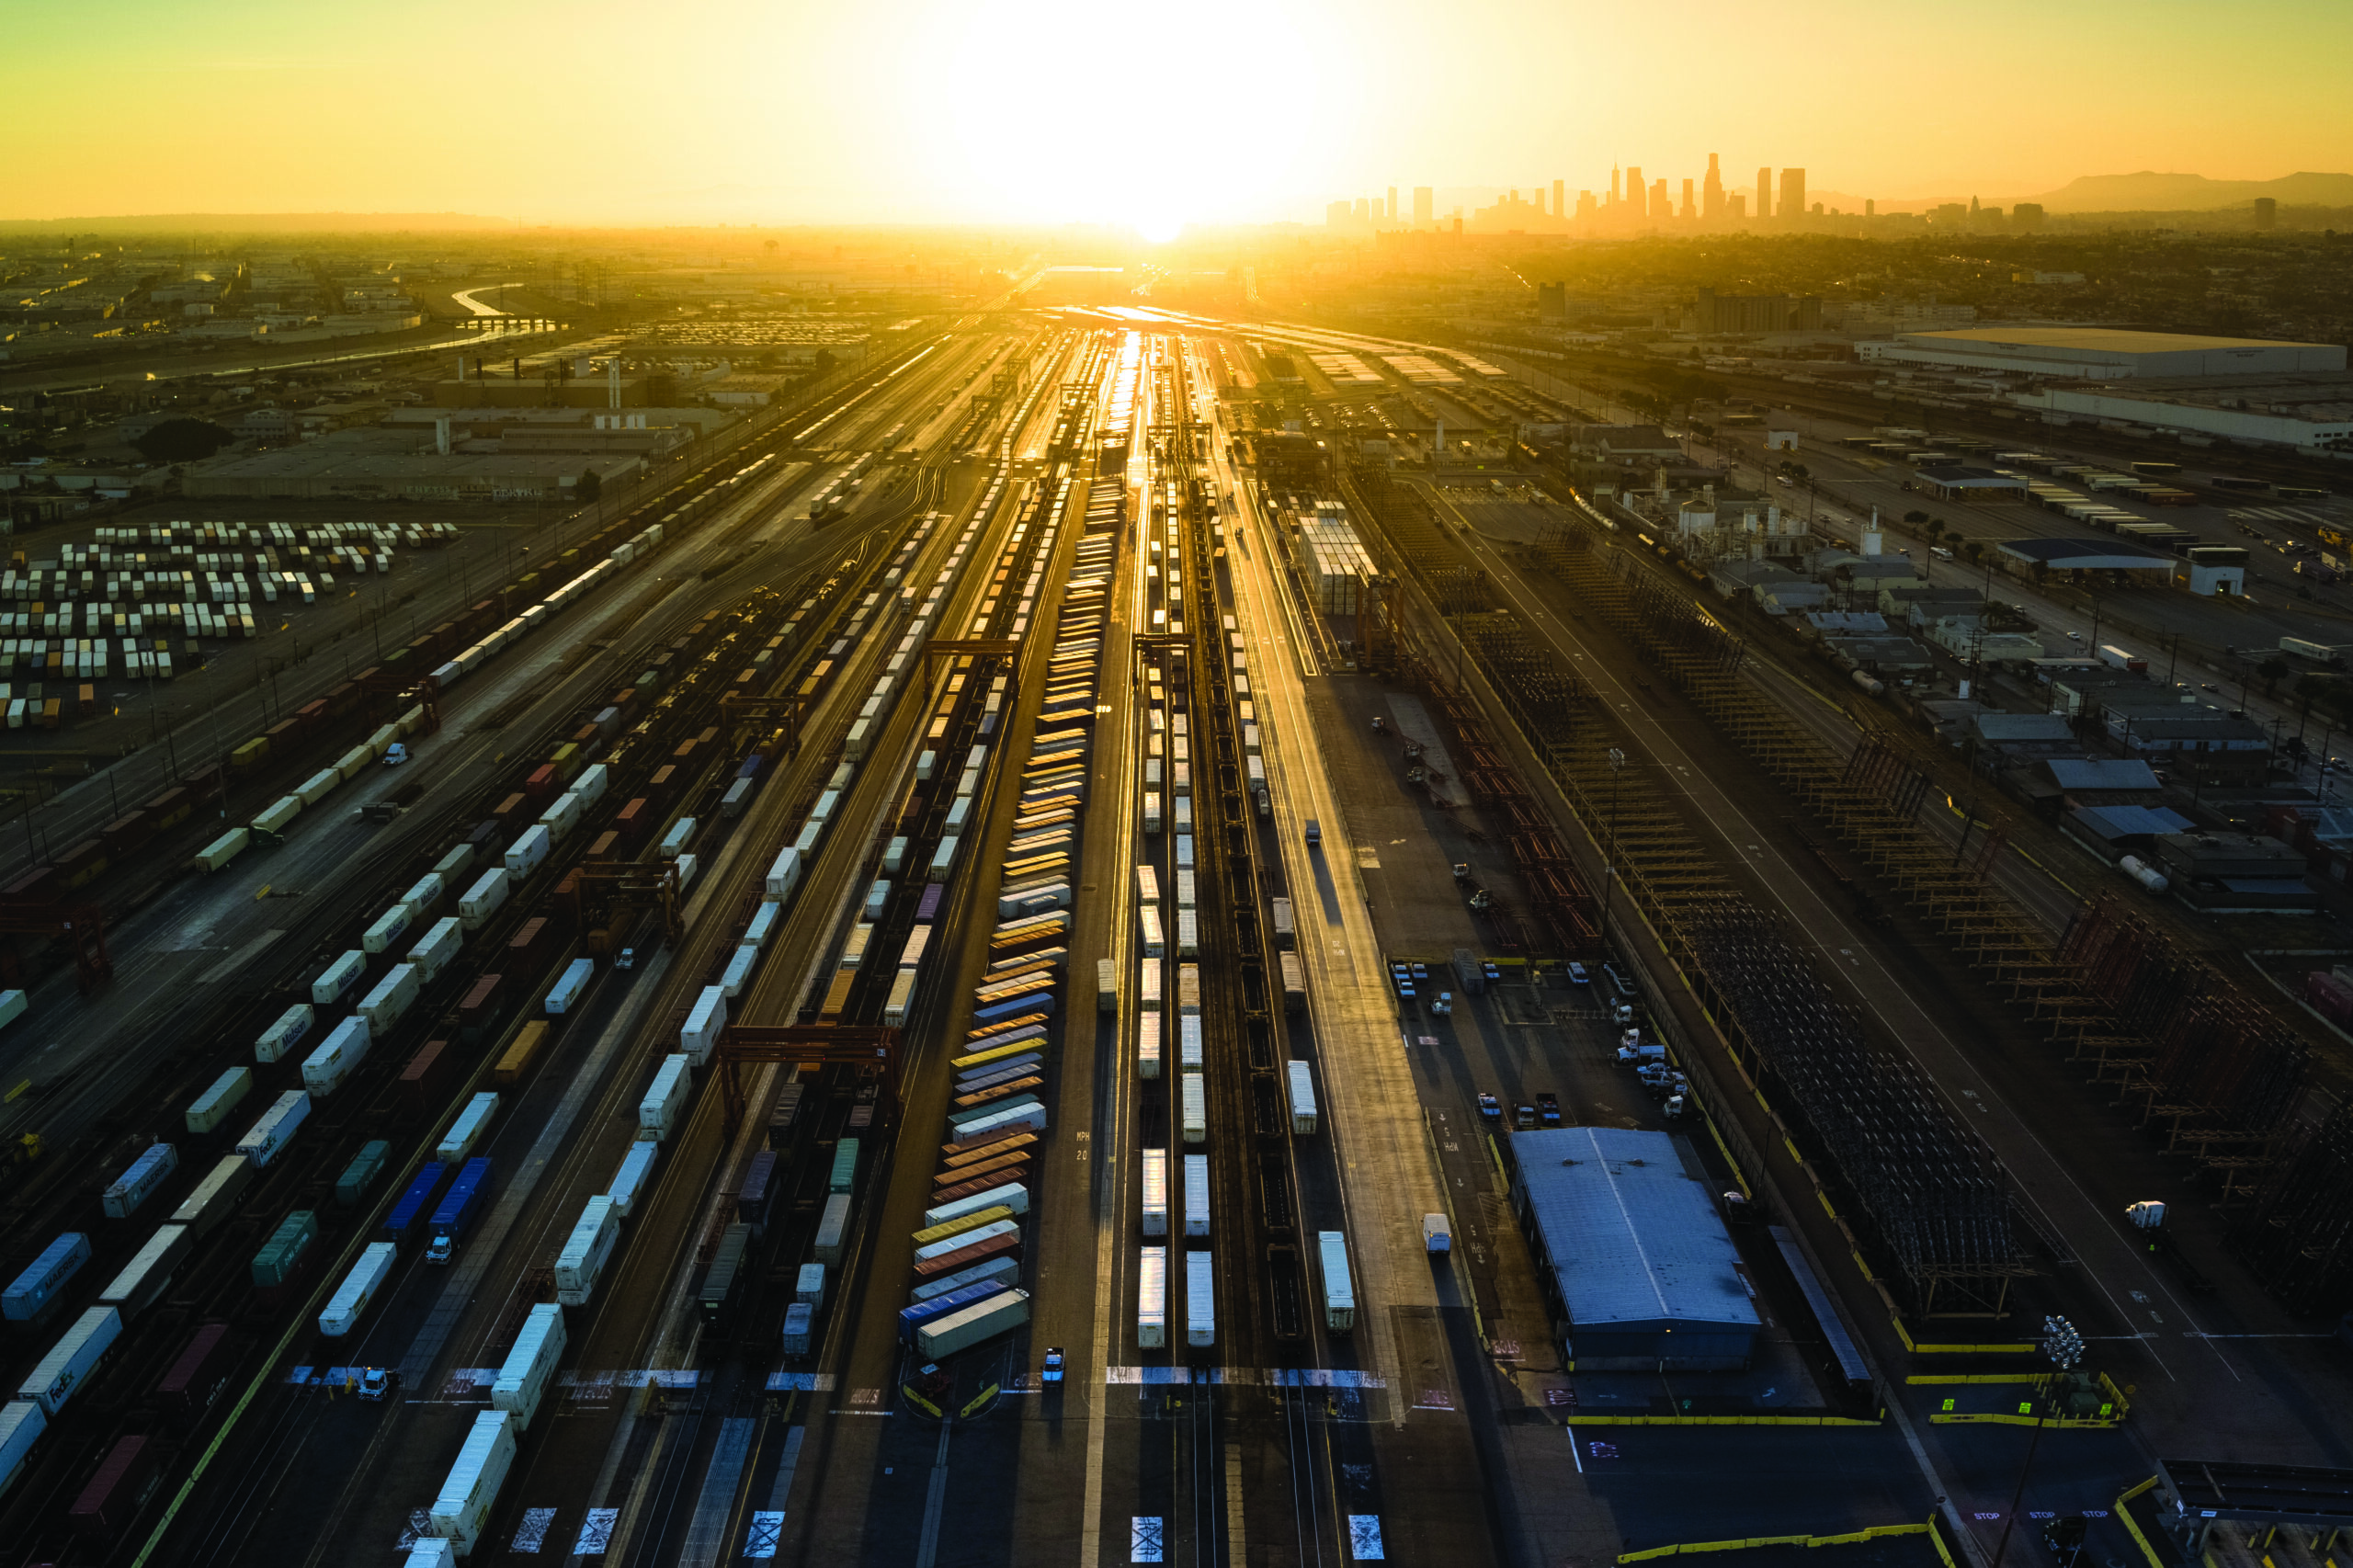 Freight train tracks heading into sunset